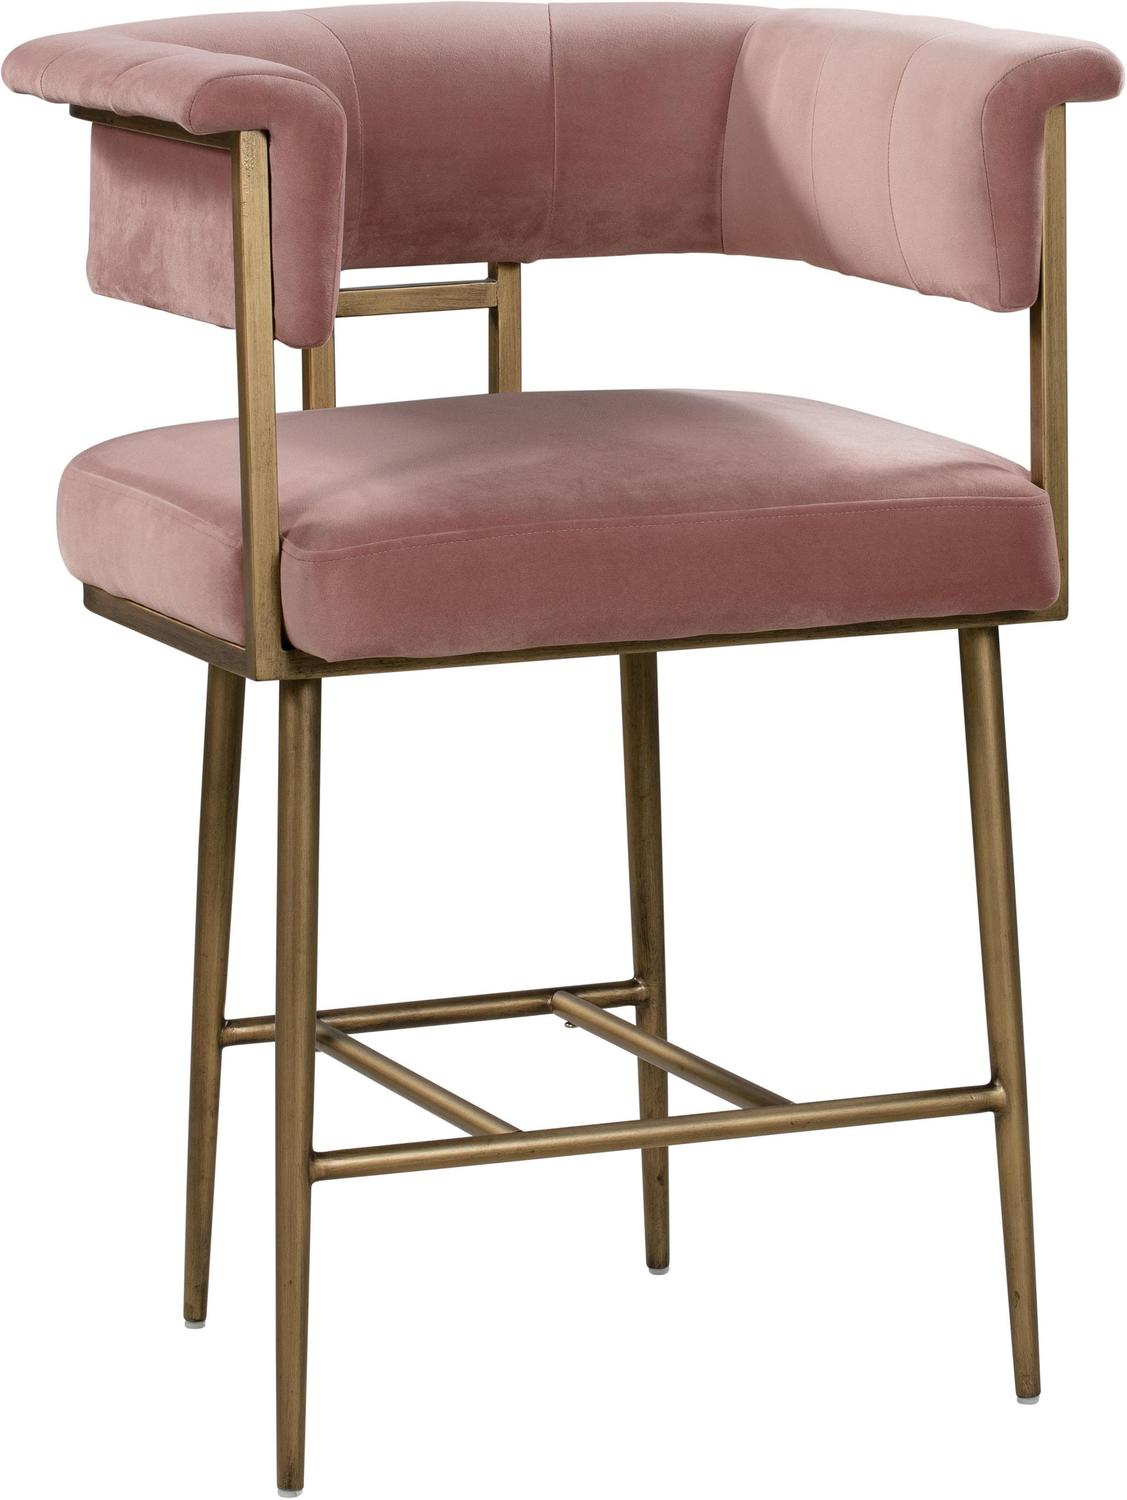 Tov Furniture Stools Bar Chairs and Stools Blush